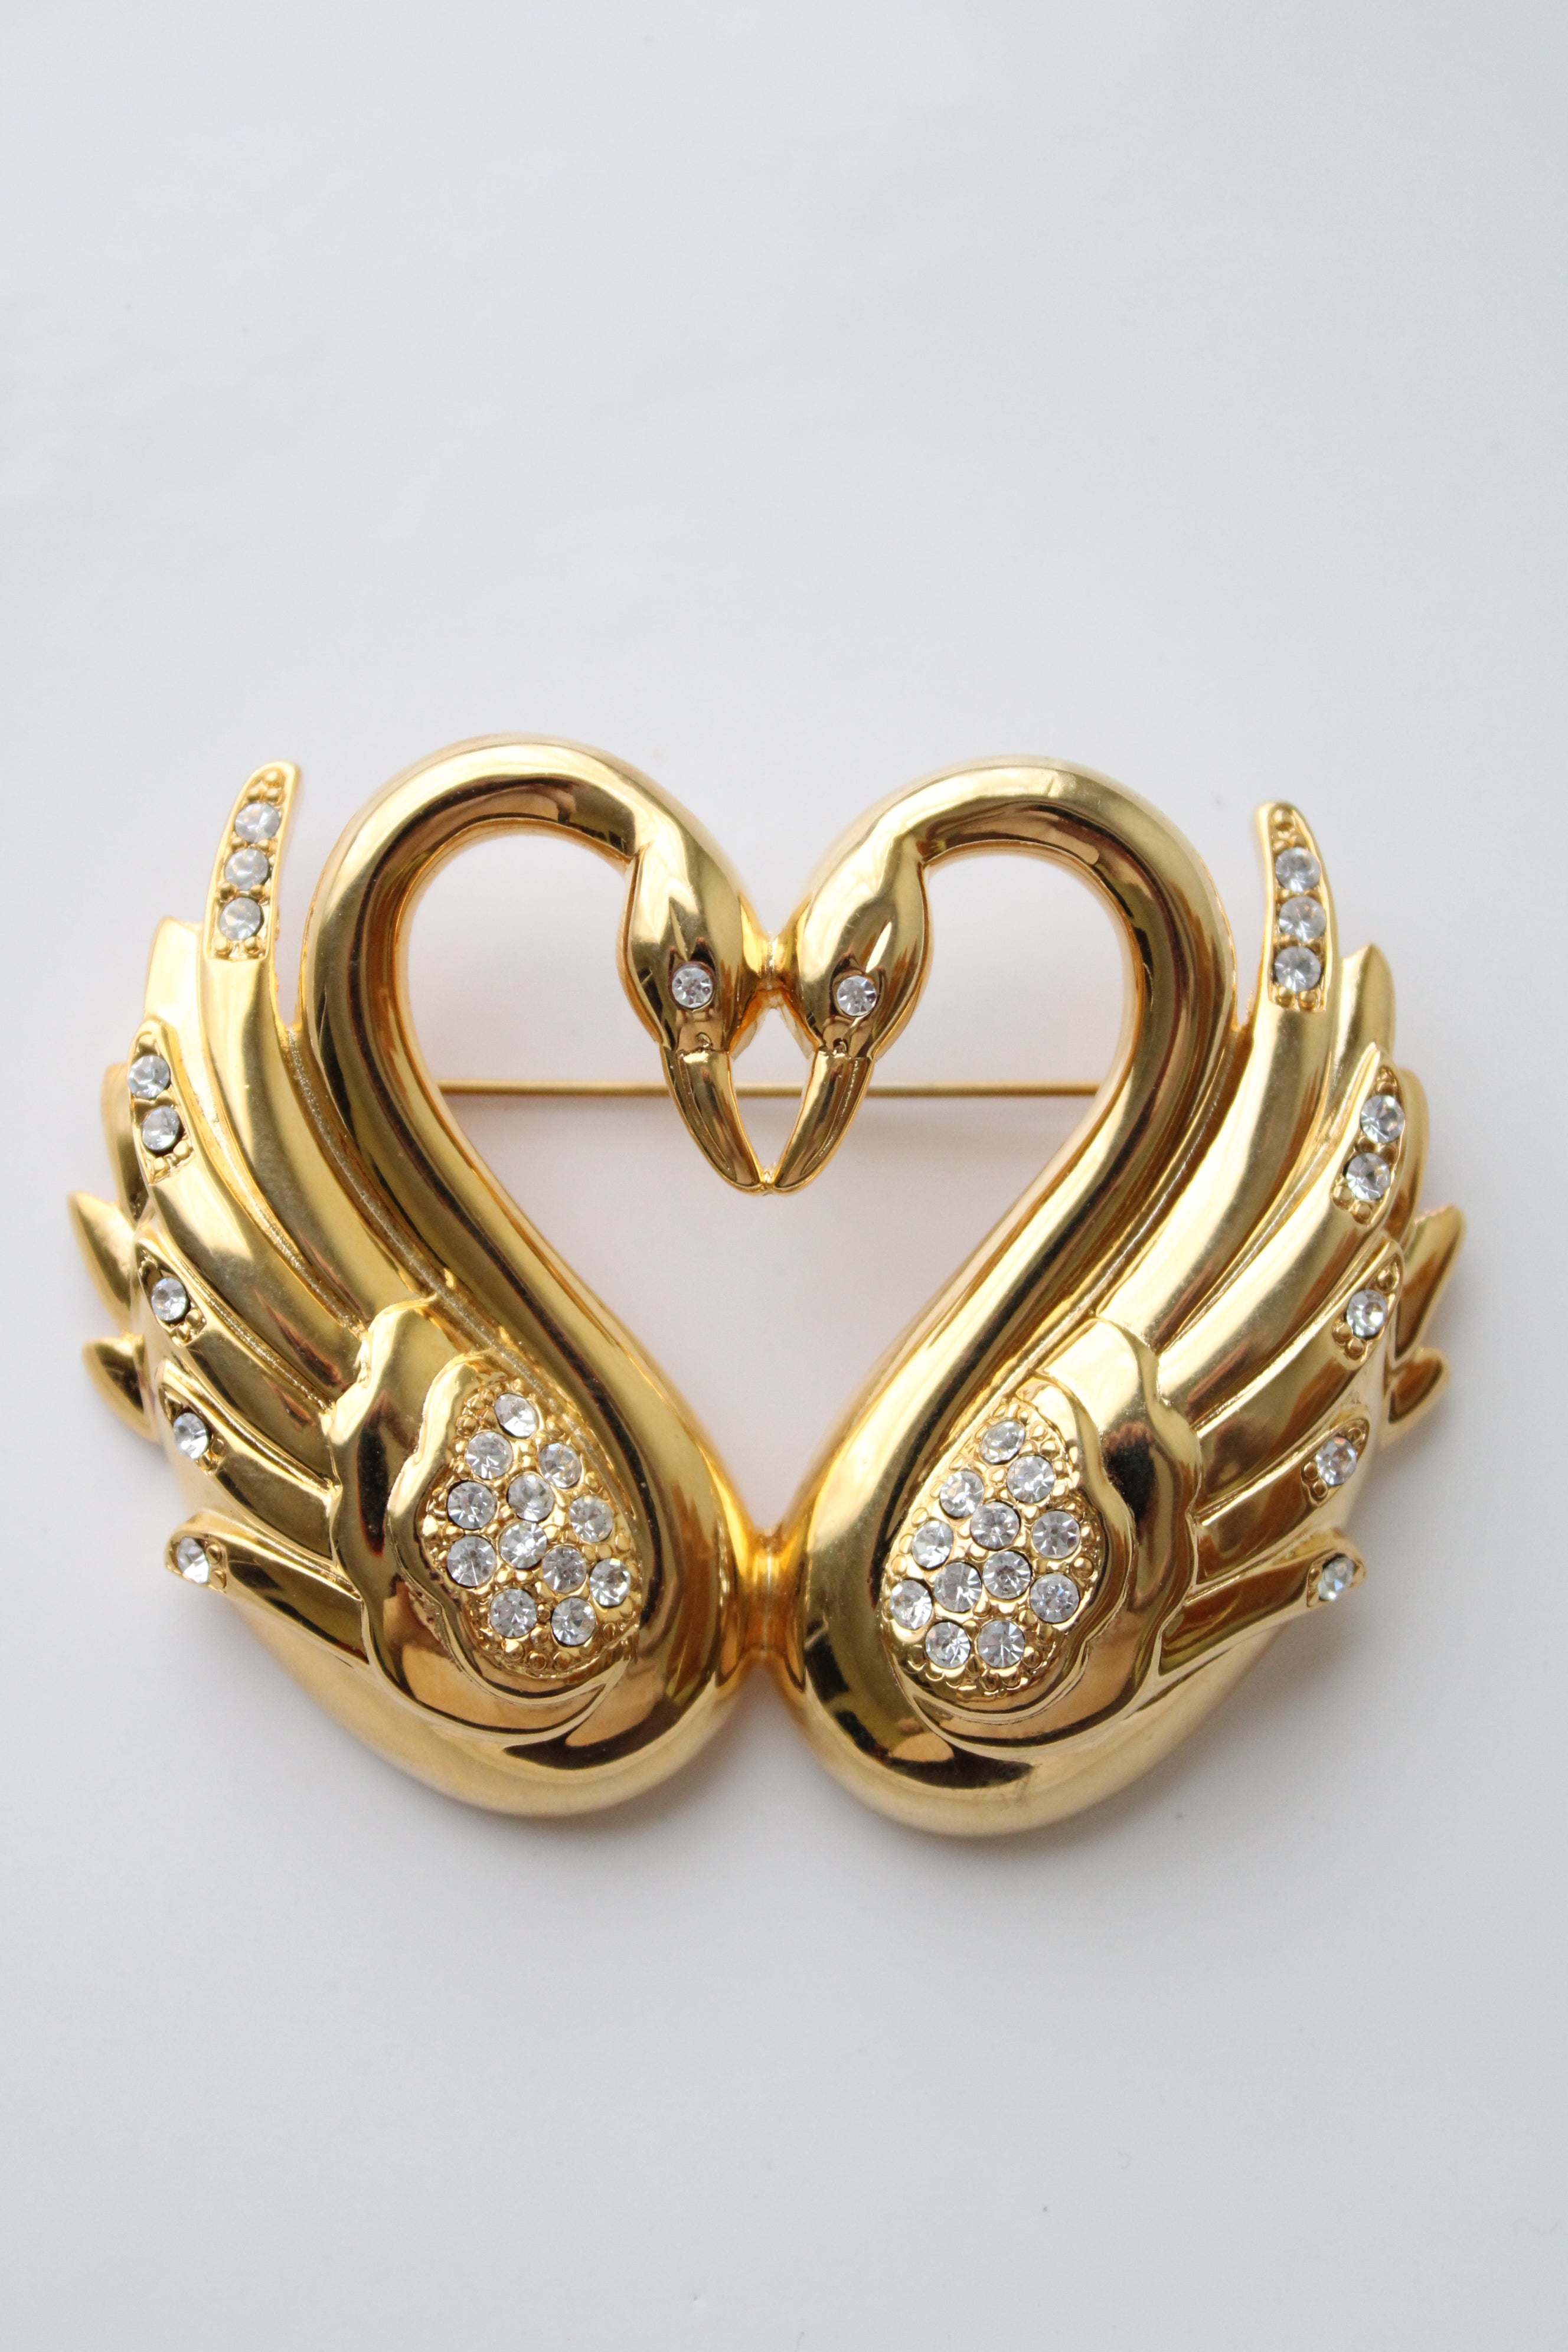 LR Gold Swan Heart Pin